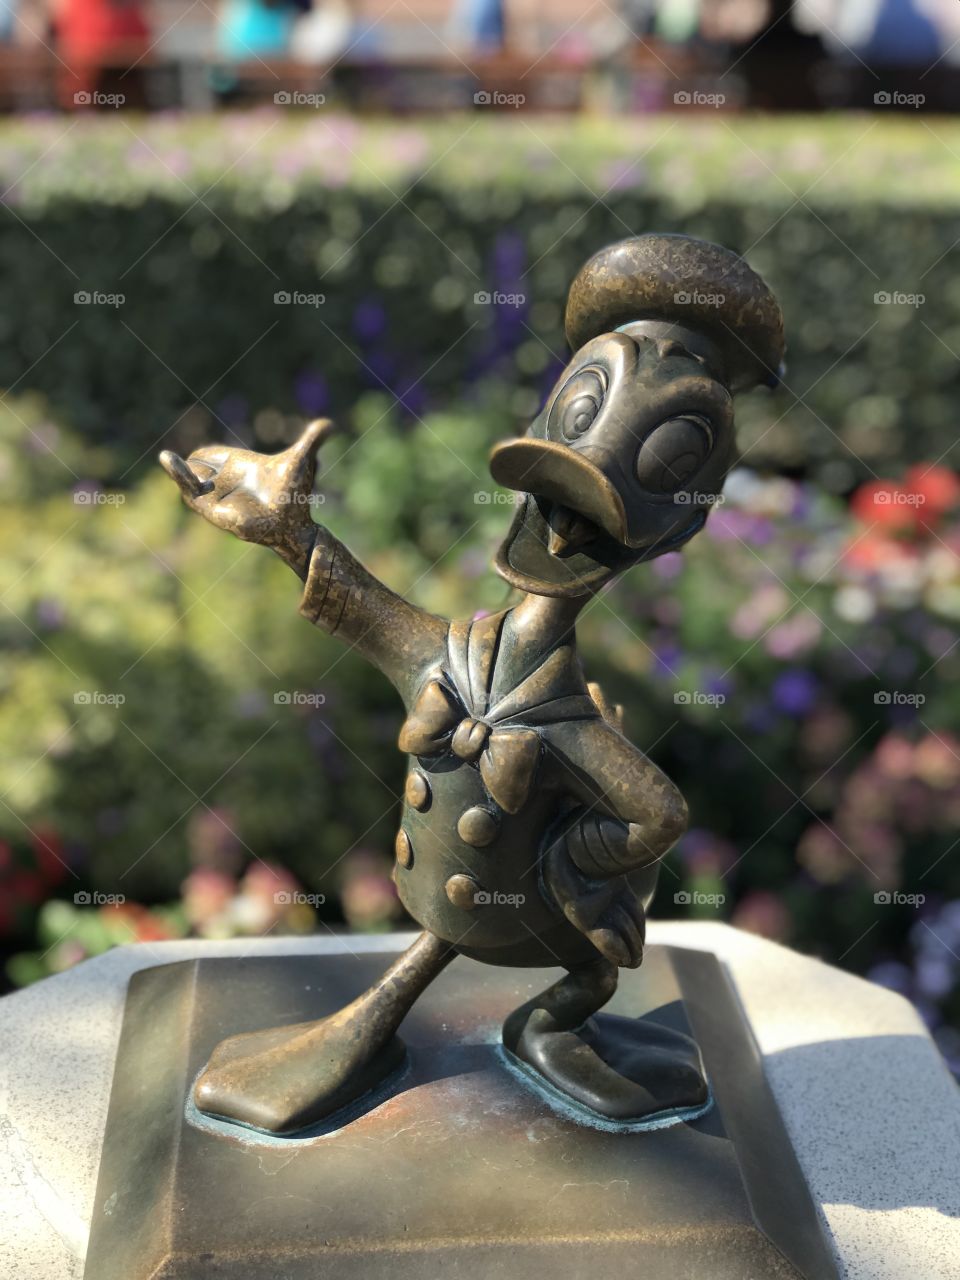 Donald Duck statue at Disneyland 